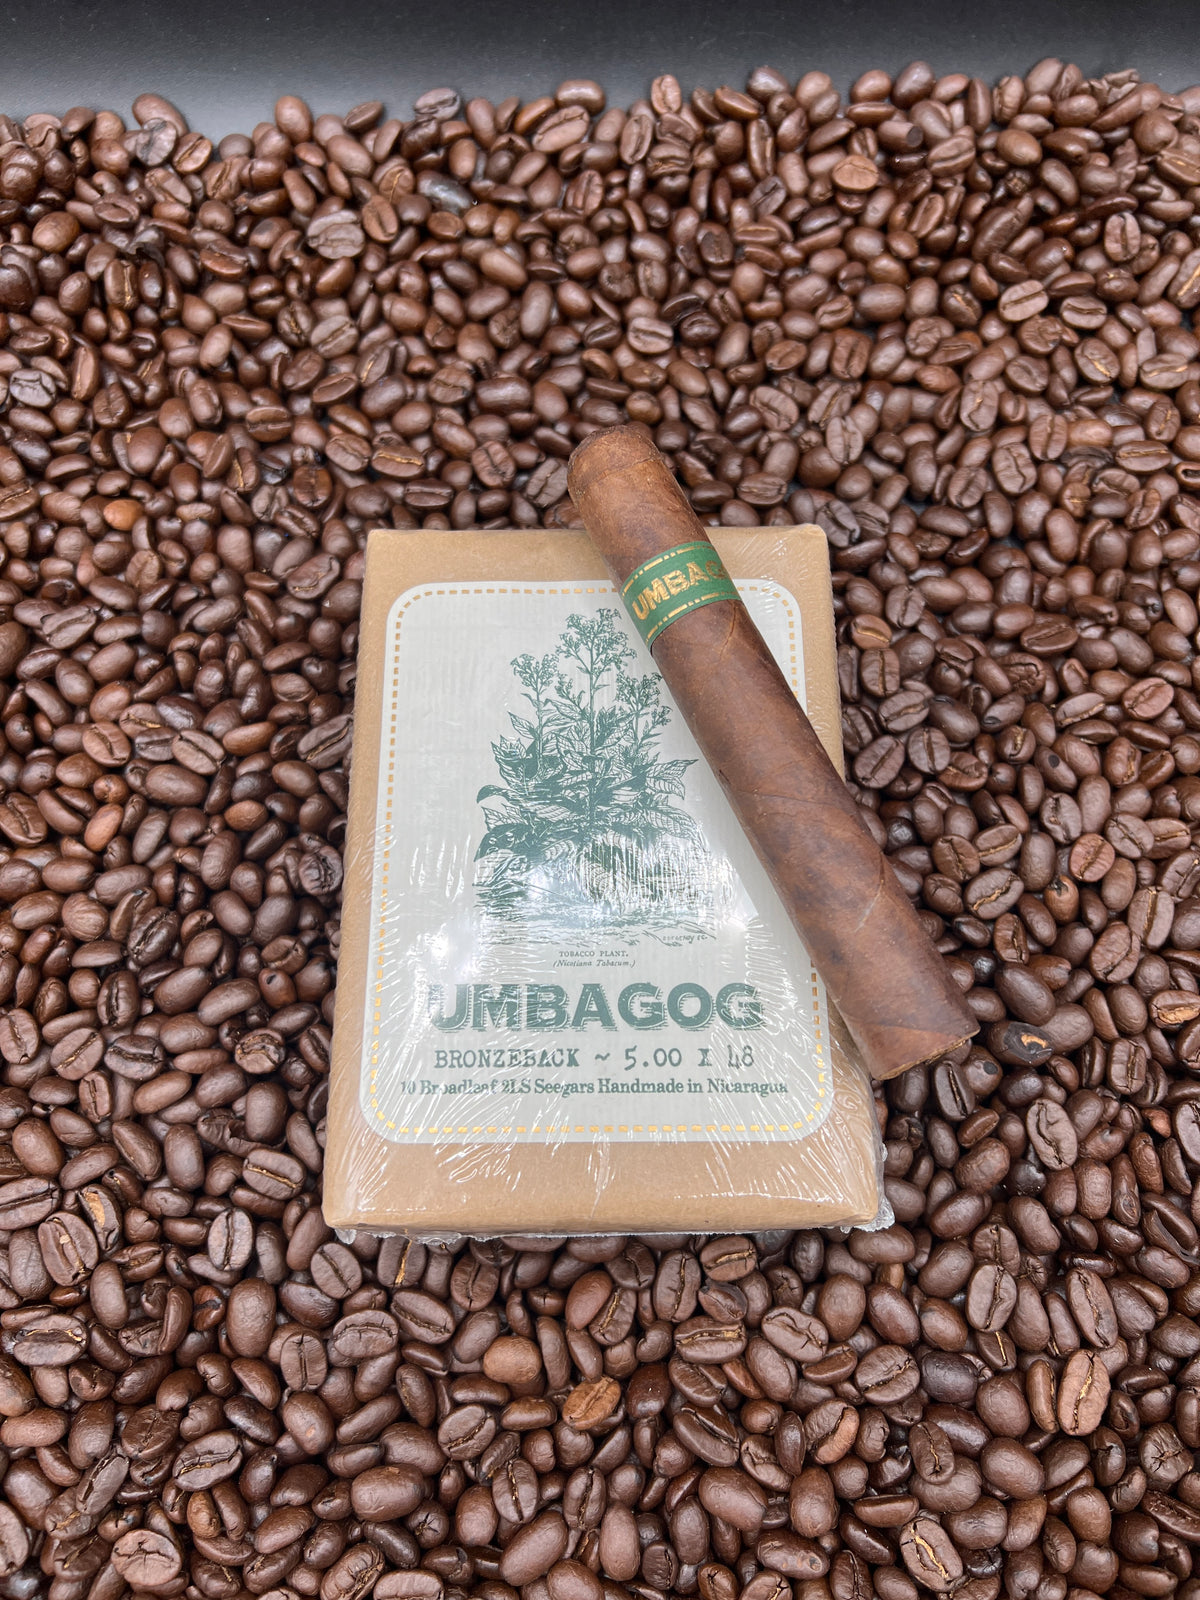 Dunbarton Tobacco &amp; Trust - Umbagog Bronzeback